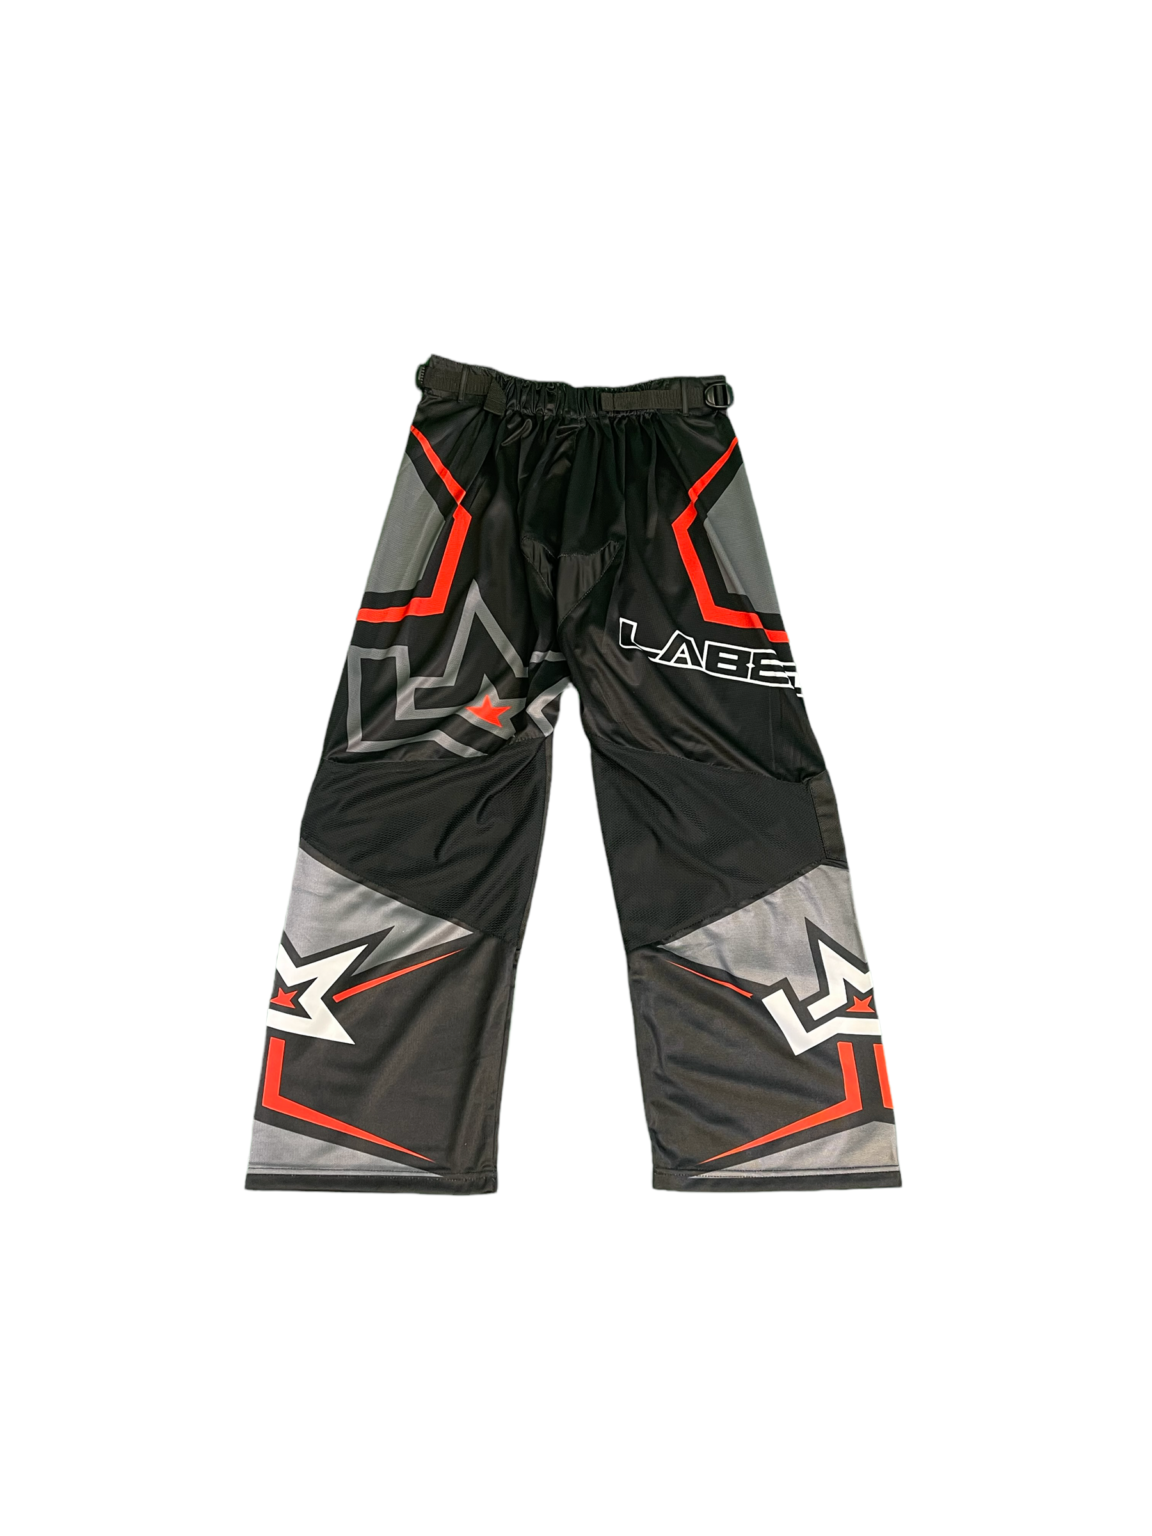 Labeda Hockey Pant Pama 7.1 JR - Black/Charcoal/Red